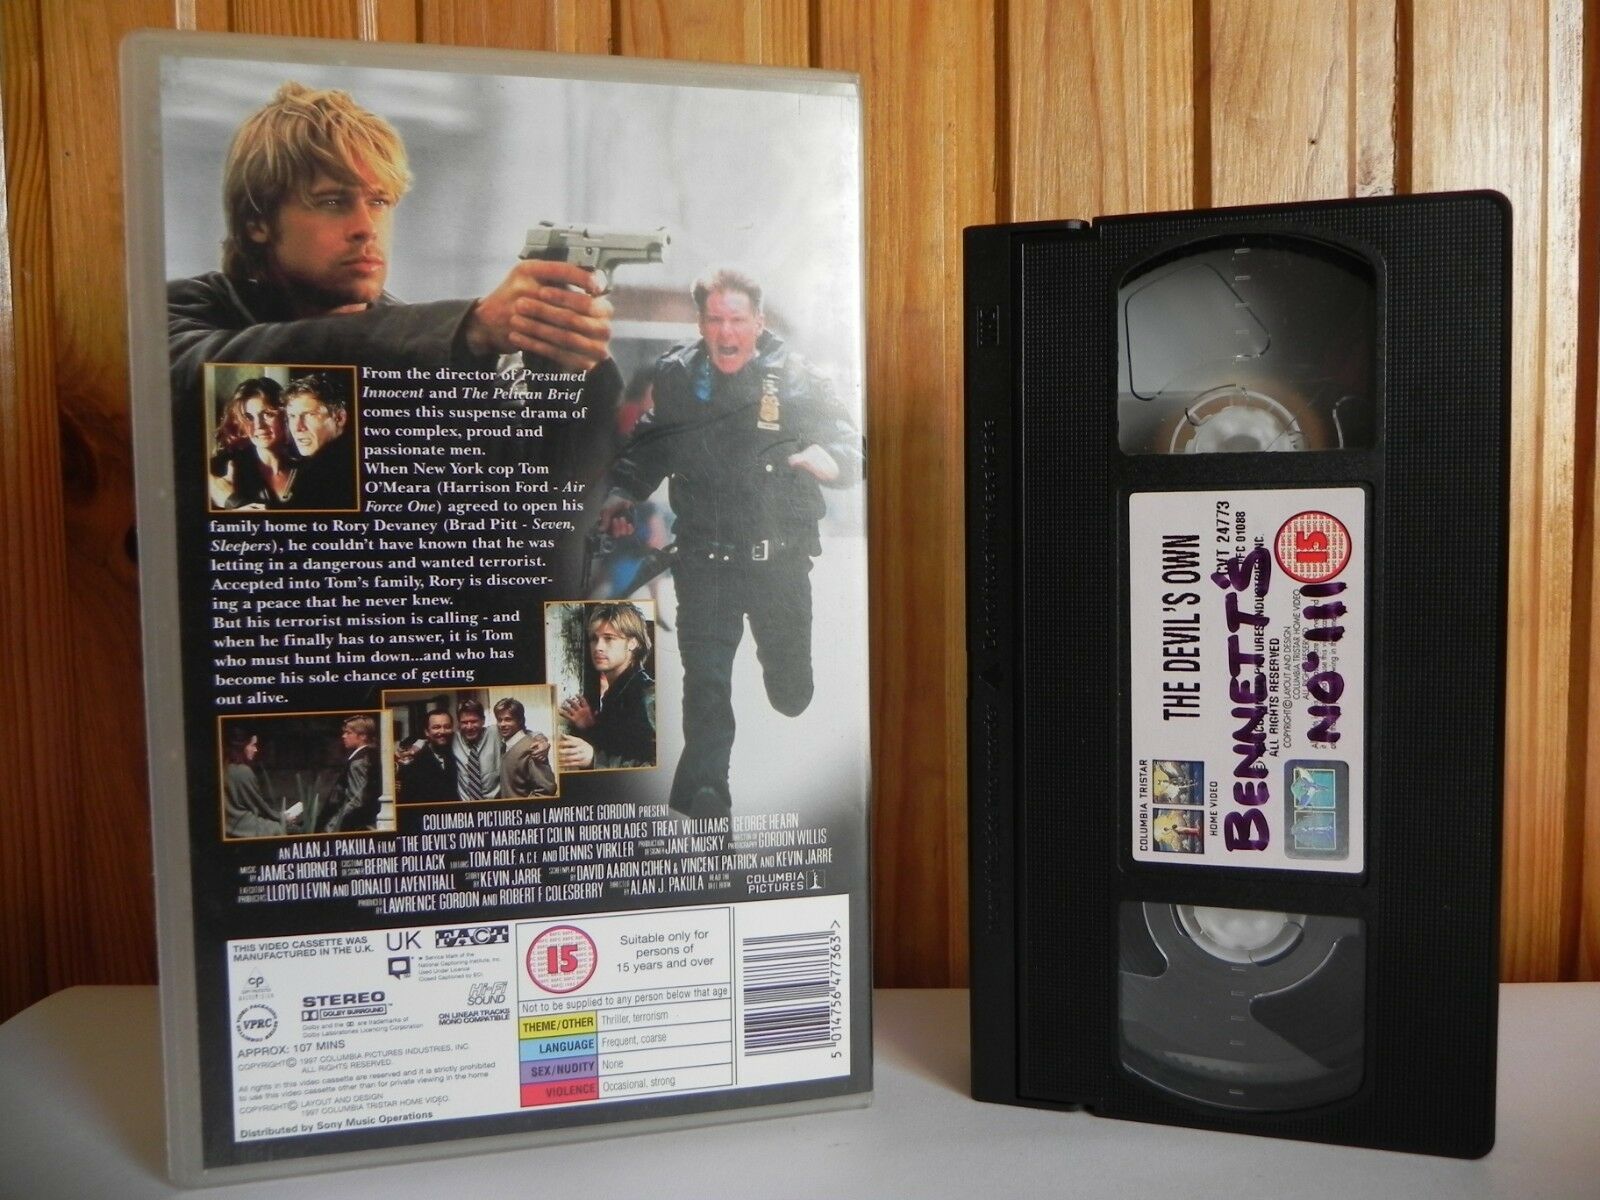 The Devil's Own - Columbia - Drama - Ex-rental - Harrison Ford - Big Box - VHS-